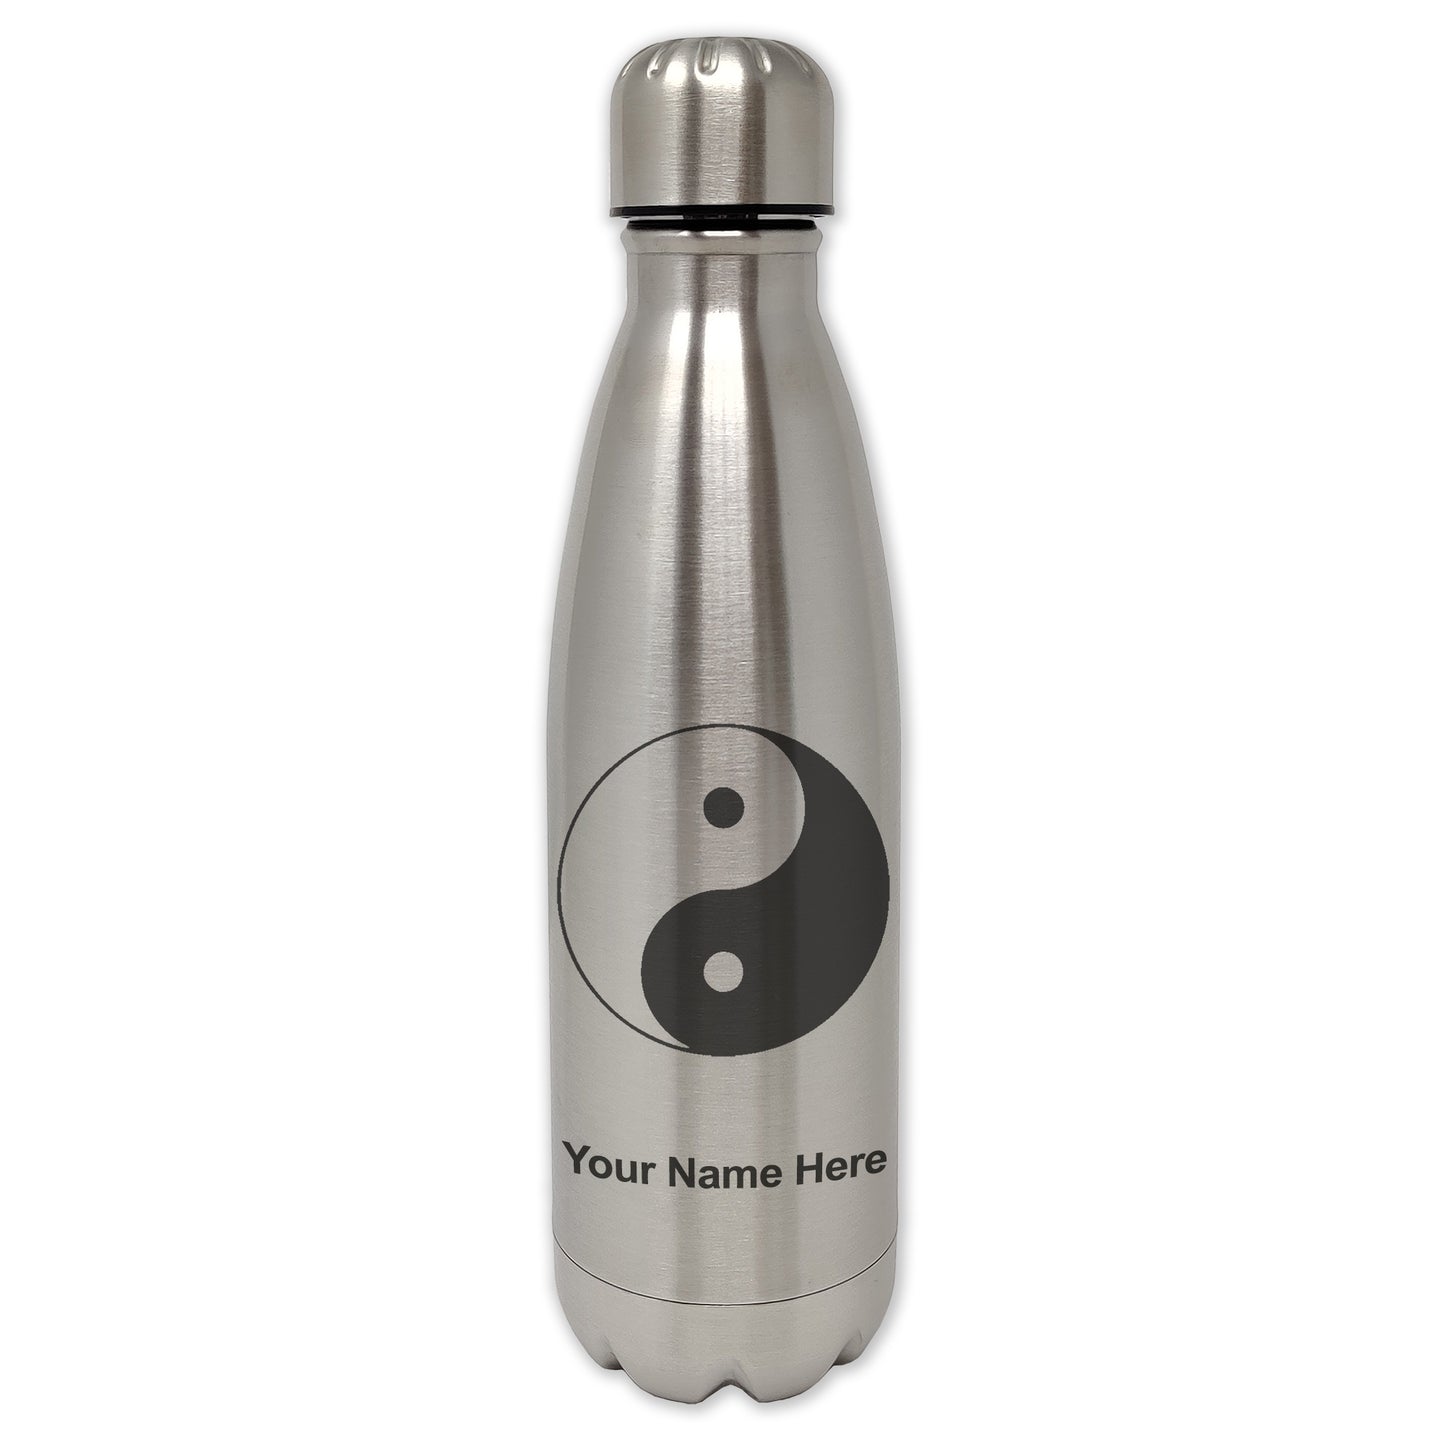 LaserGram Single Wall Water Bottle, Yin Yang, Personalized Engraving Included